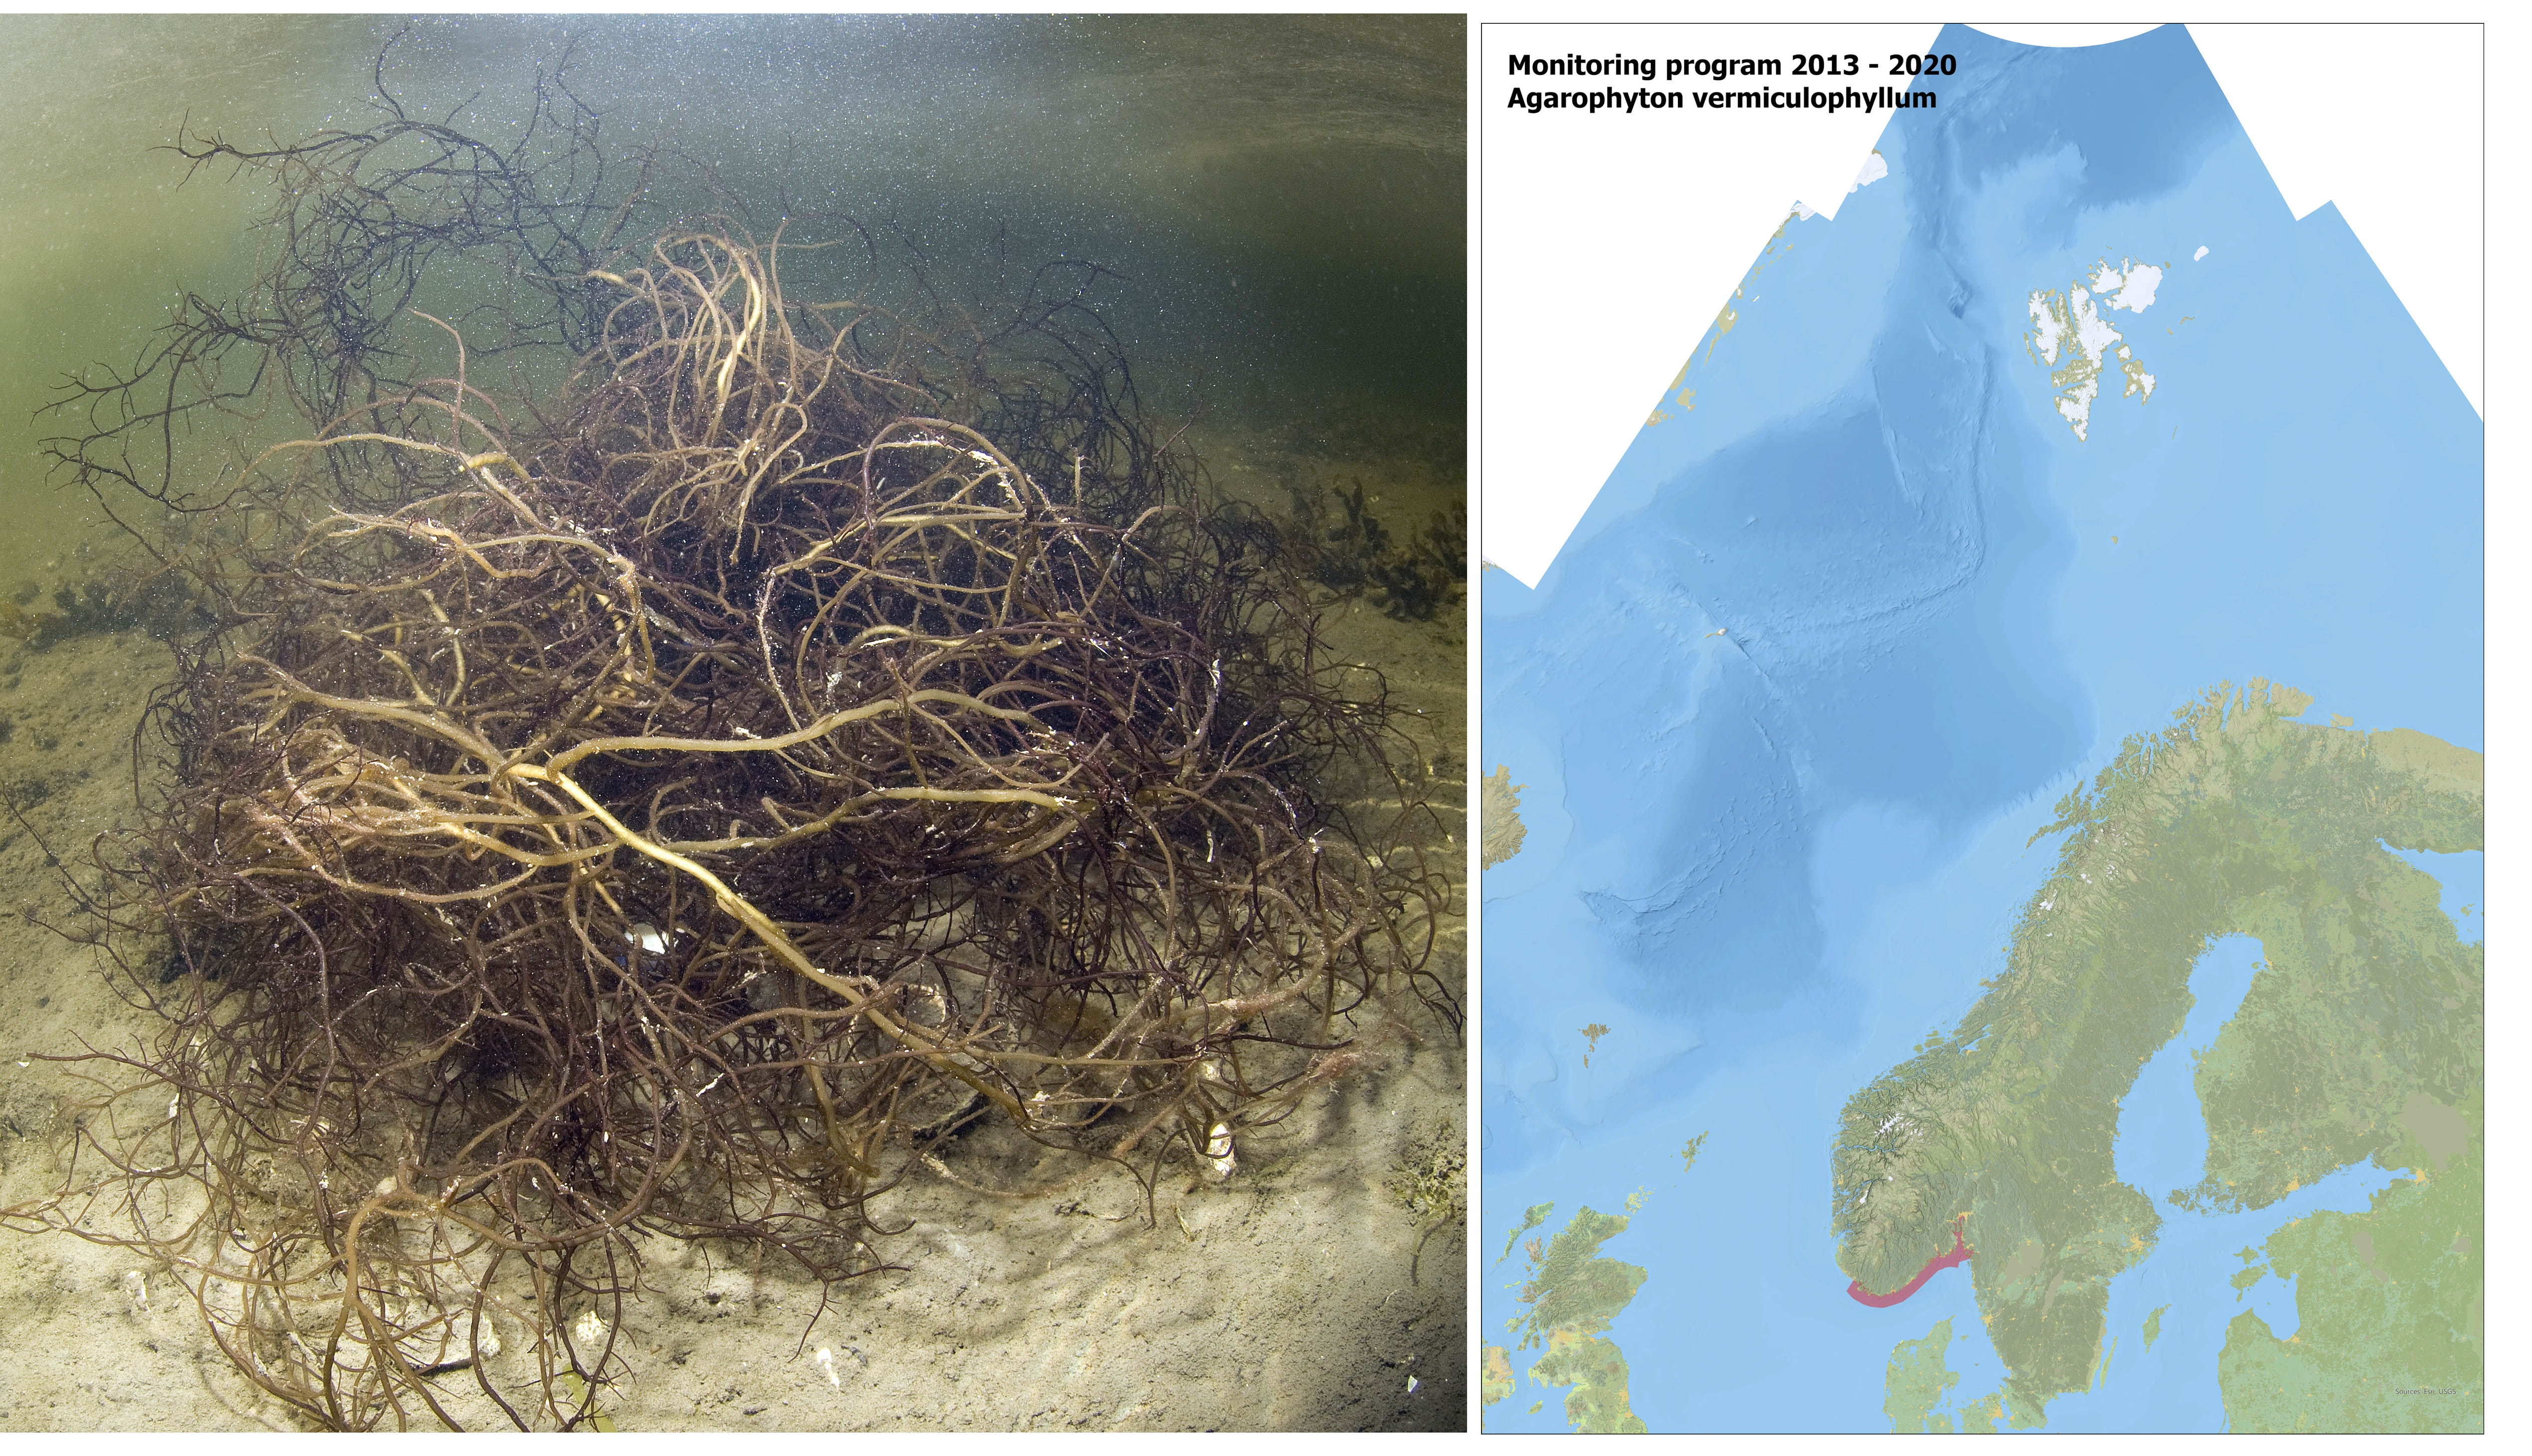 Bildet til venstre viser rødalgen A. vermiculophyllum, kartet til venstre viser hvor arten blir overvåket